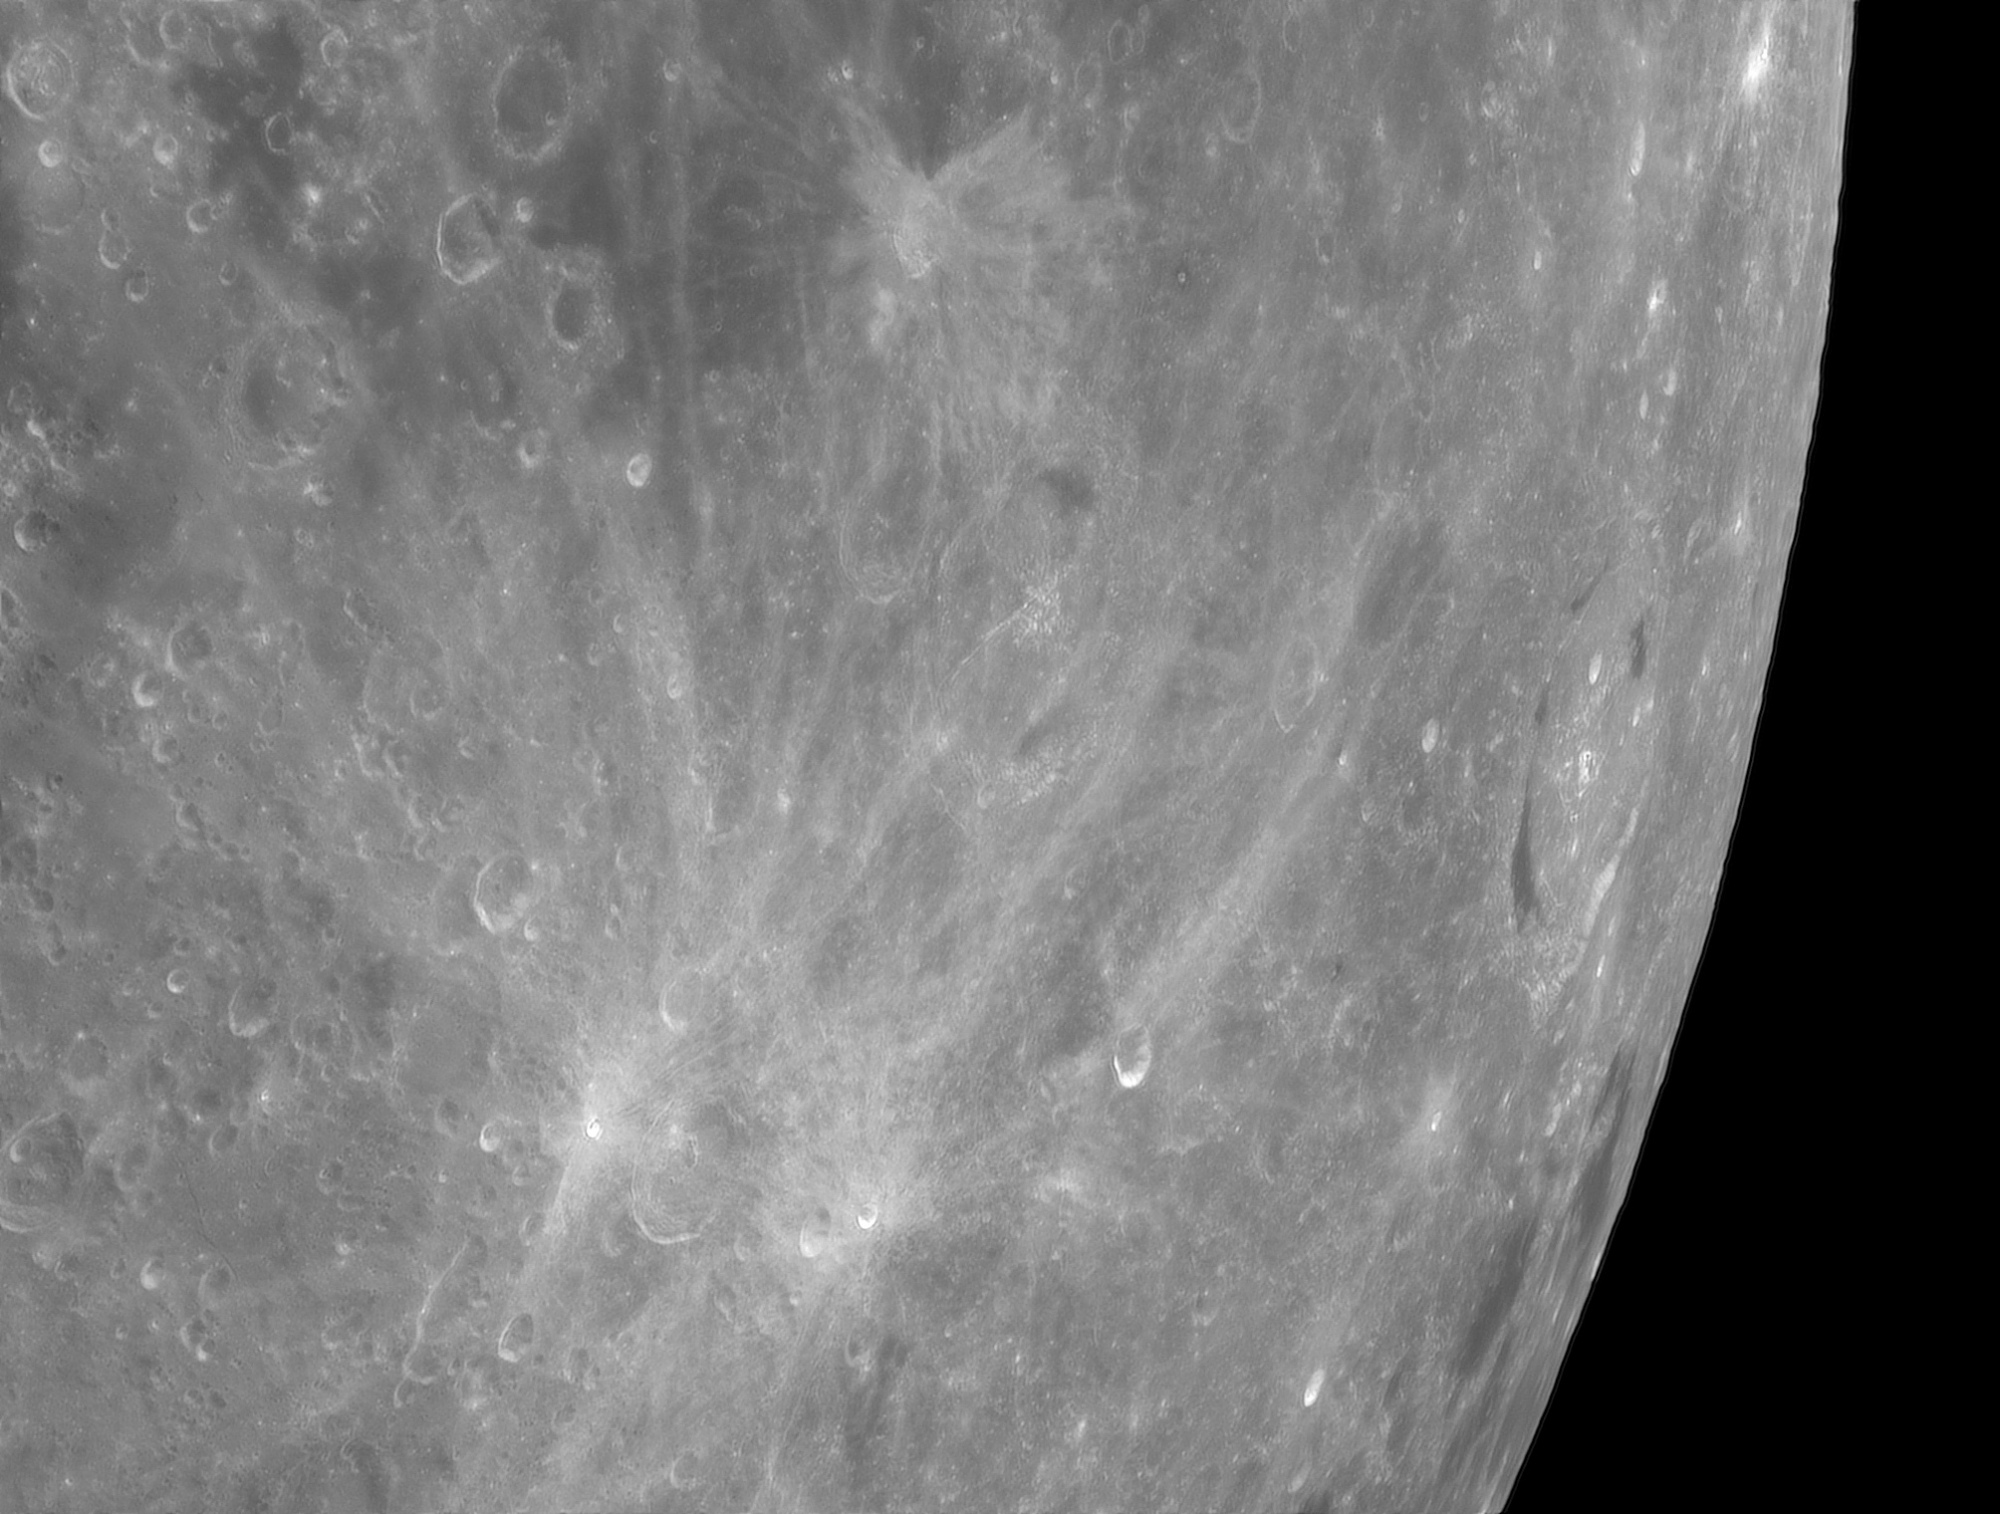 Lune-20240319_Humboldt-ba-01-AS.thumb.jpg.2de4ea4ac050987a83bc5592c7ce746f.jpg